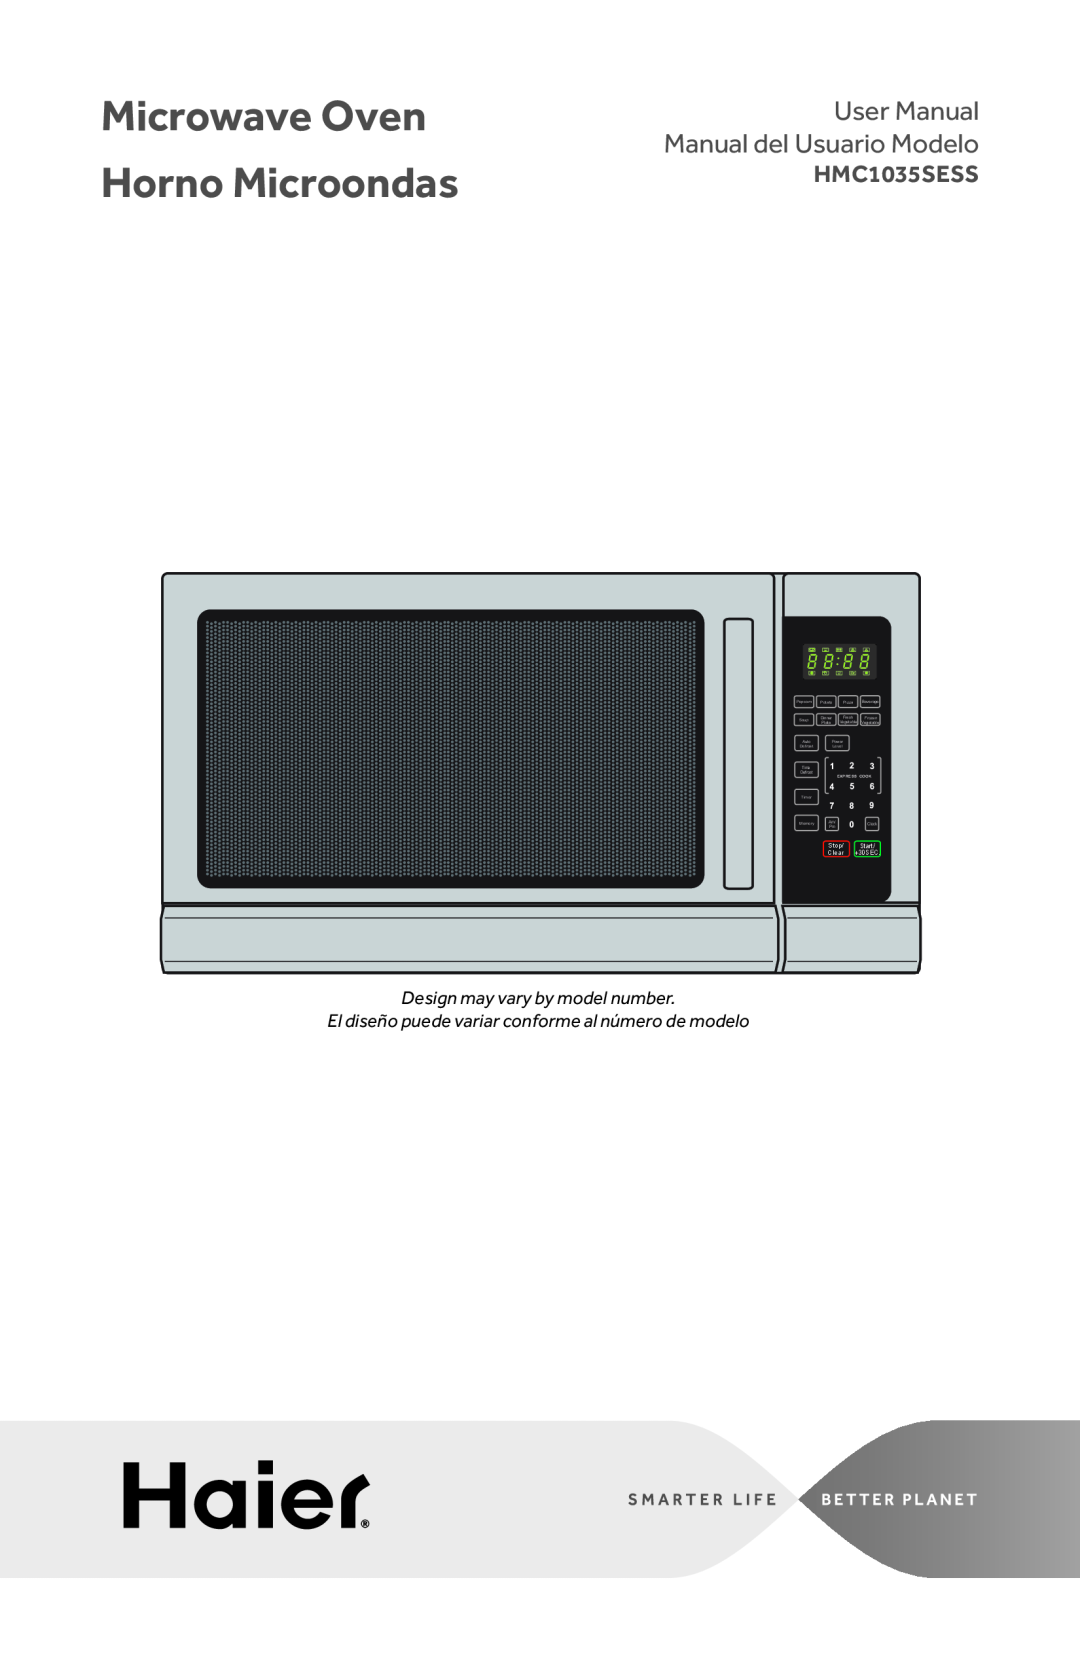 Haier HMC1035SESS user manual Microwave Oven Horno Microondas, User Manual Manual del Usuario Modelo, Stop, Start, Clear 